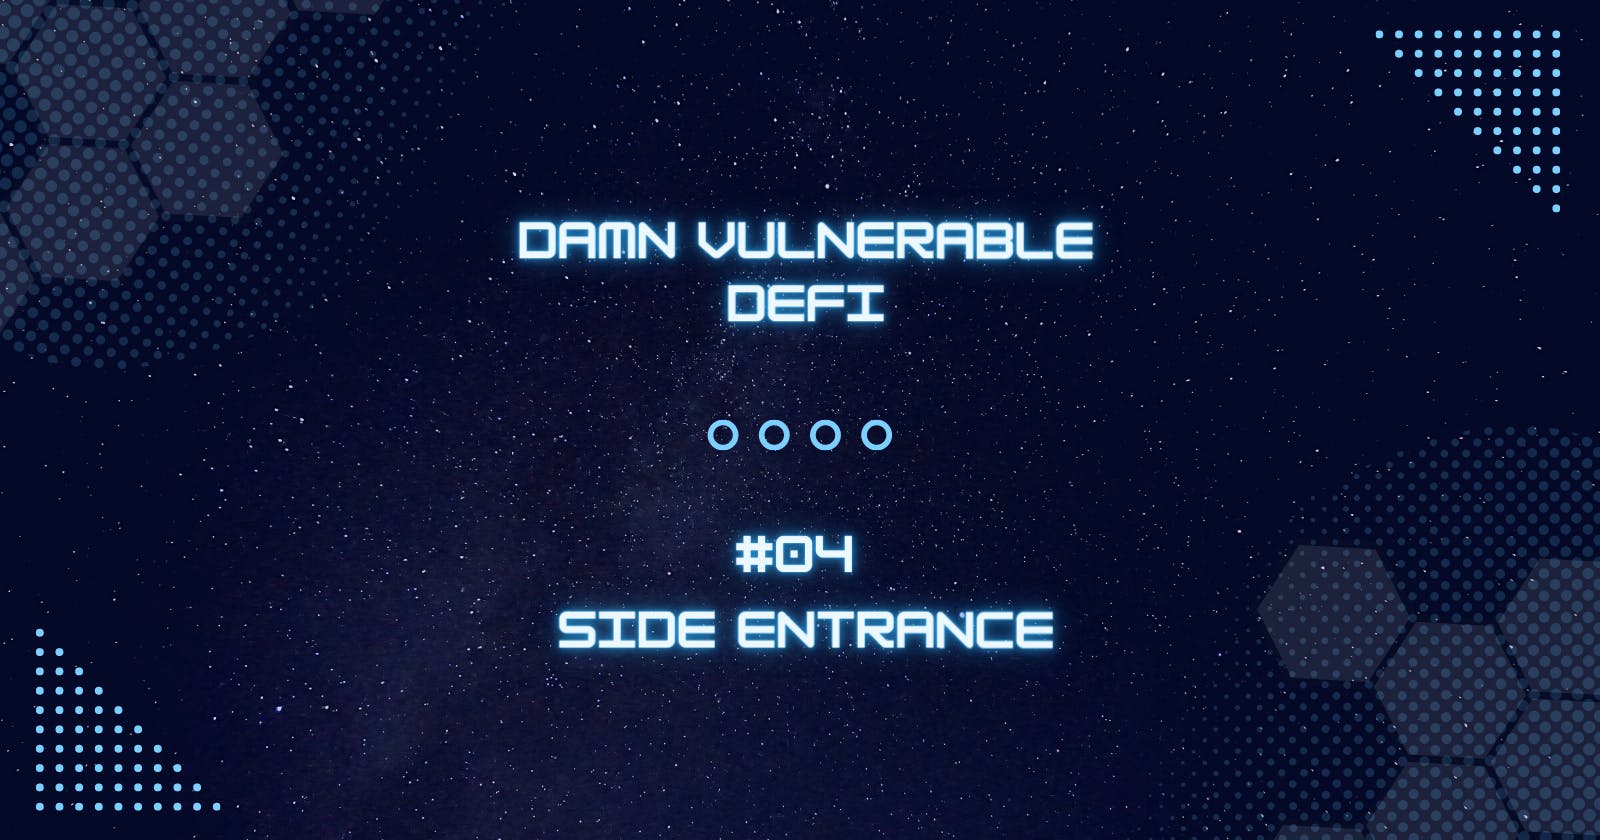 Side Entrance - Damn Vulnerable DeFi #04